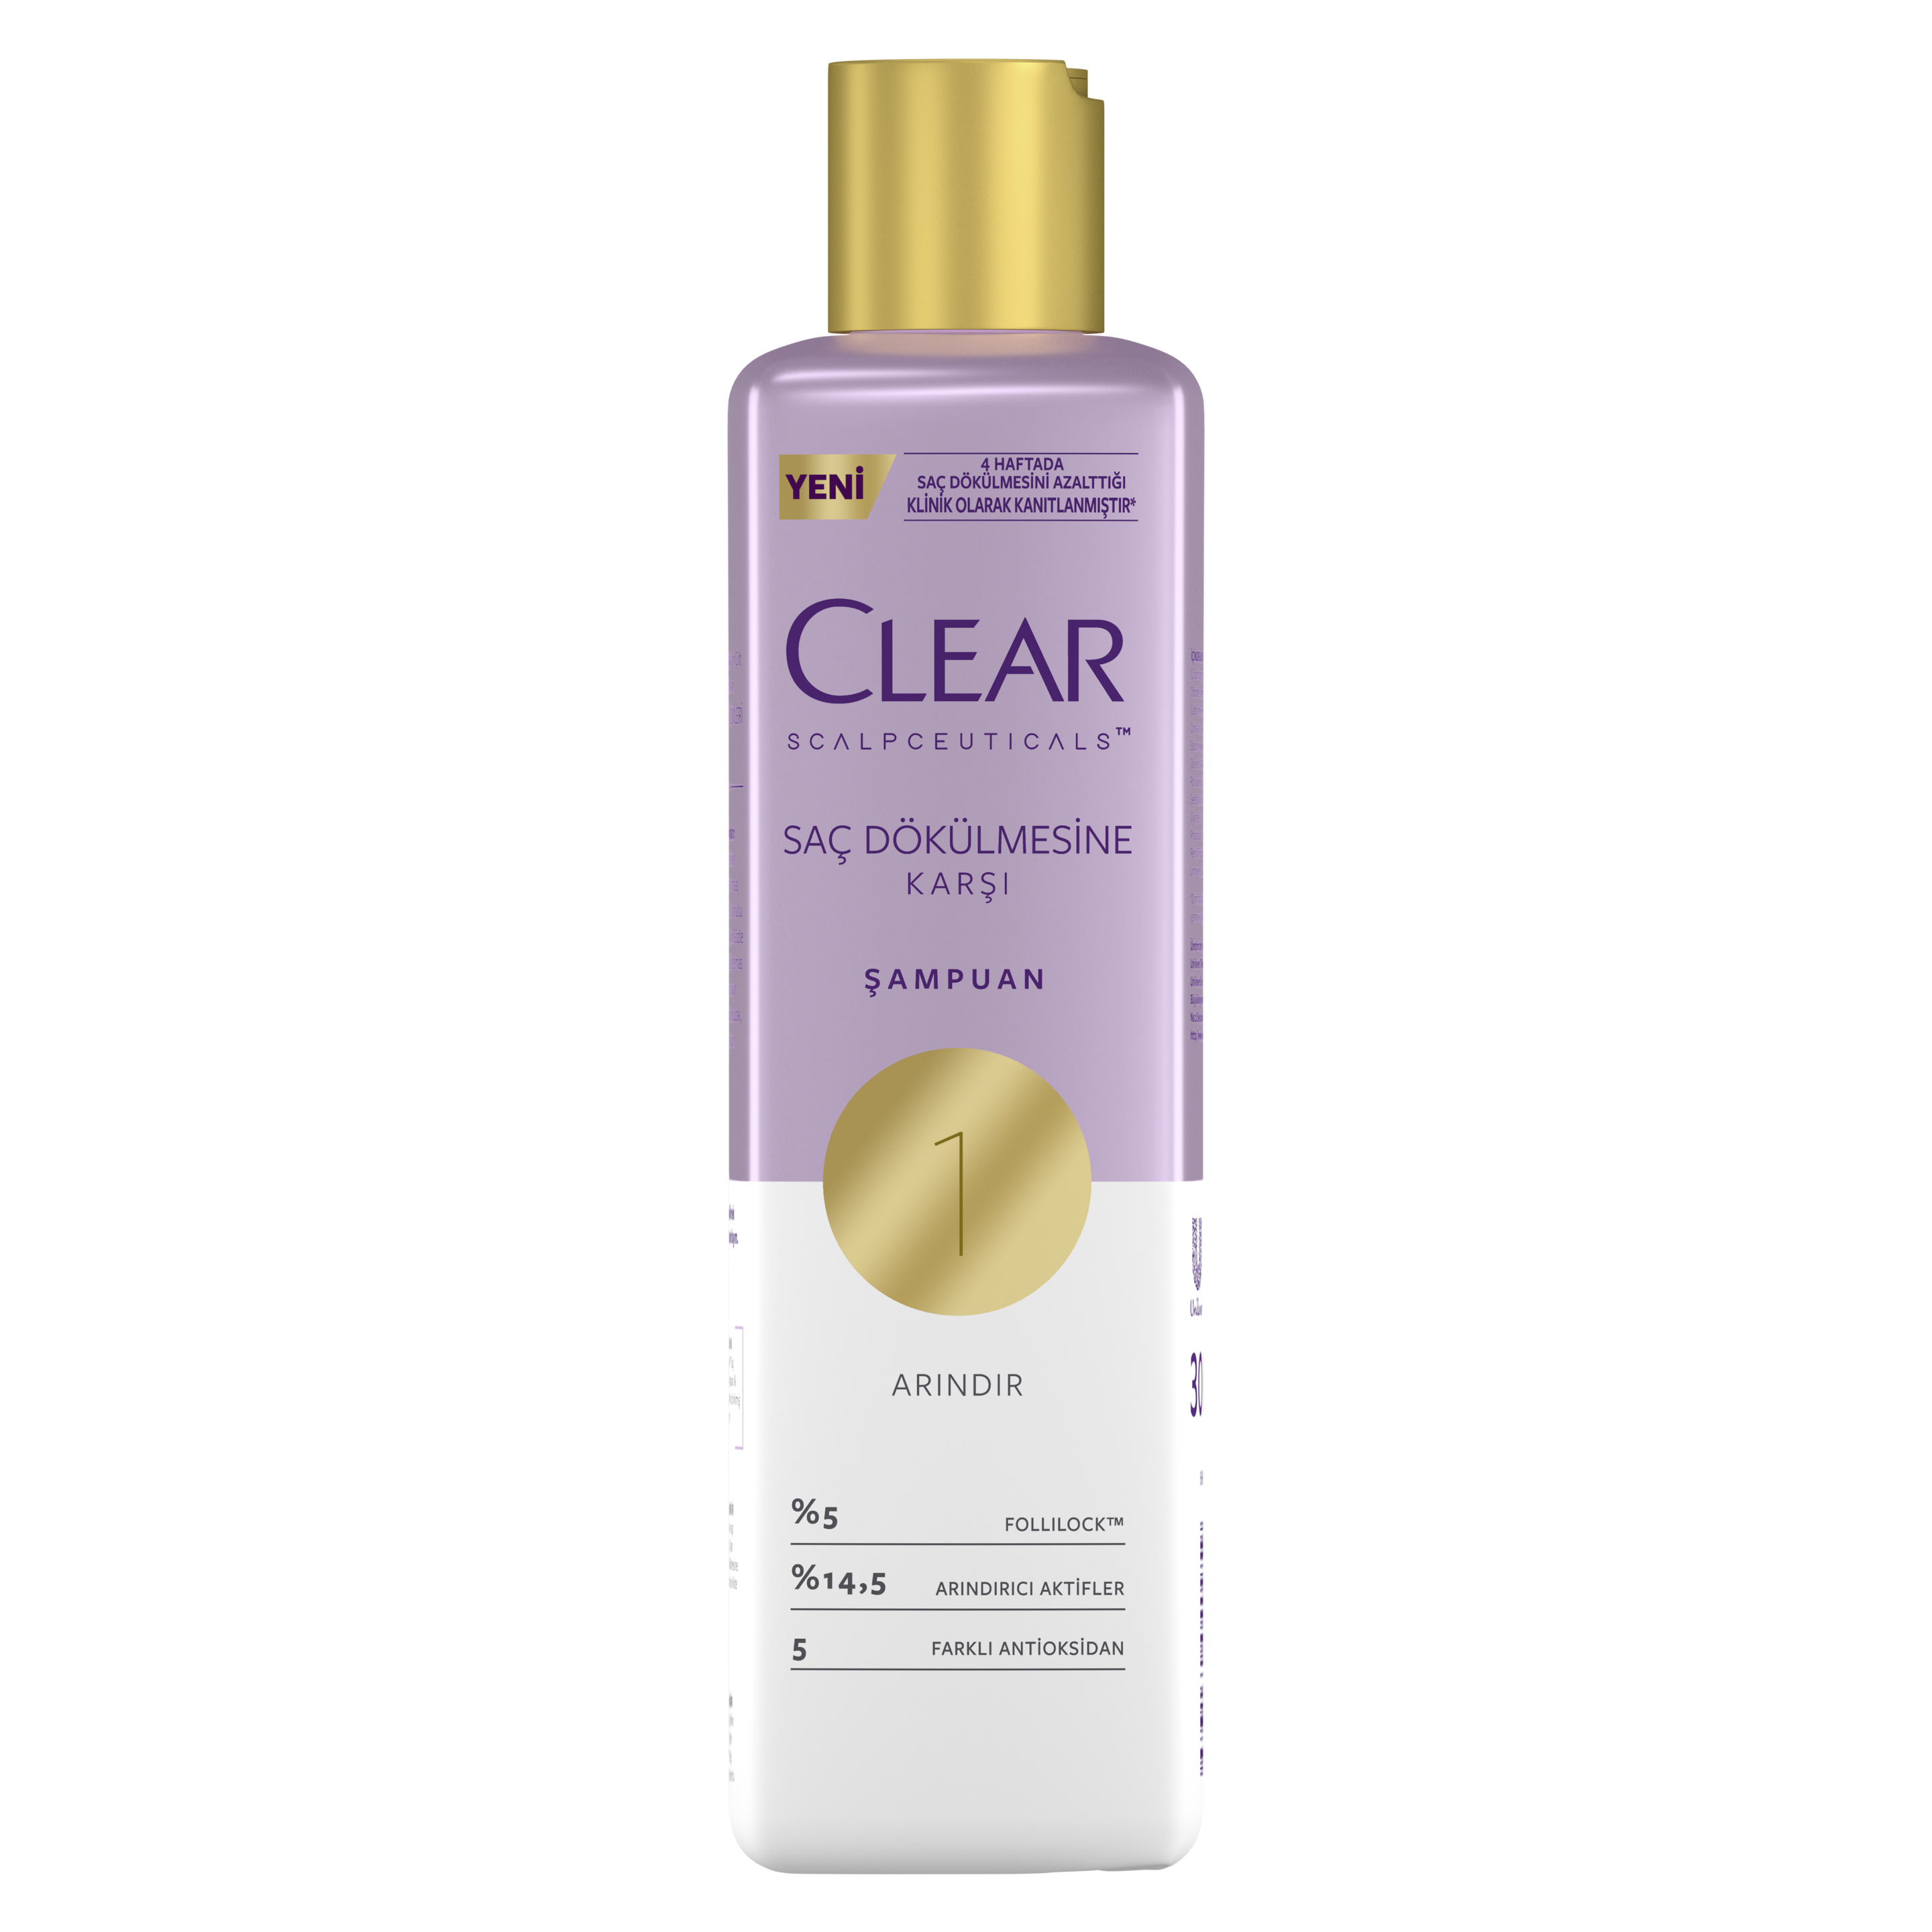 Clear Scalpceuticals Saç Dökülmesine Karşı Şampuan